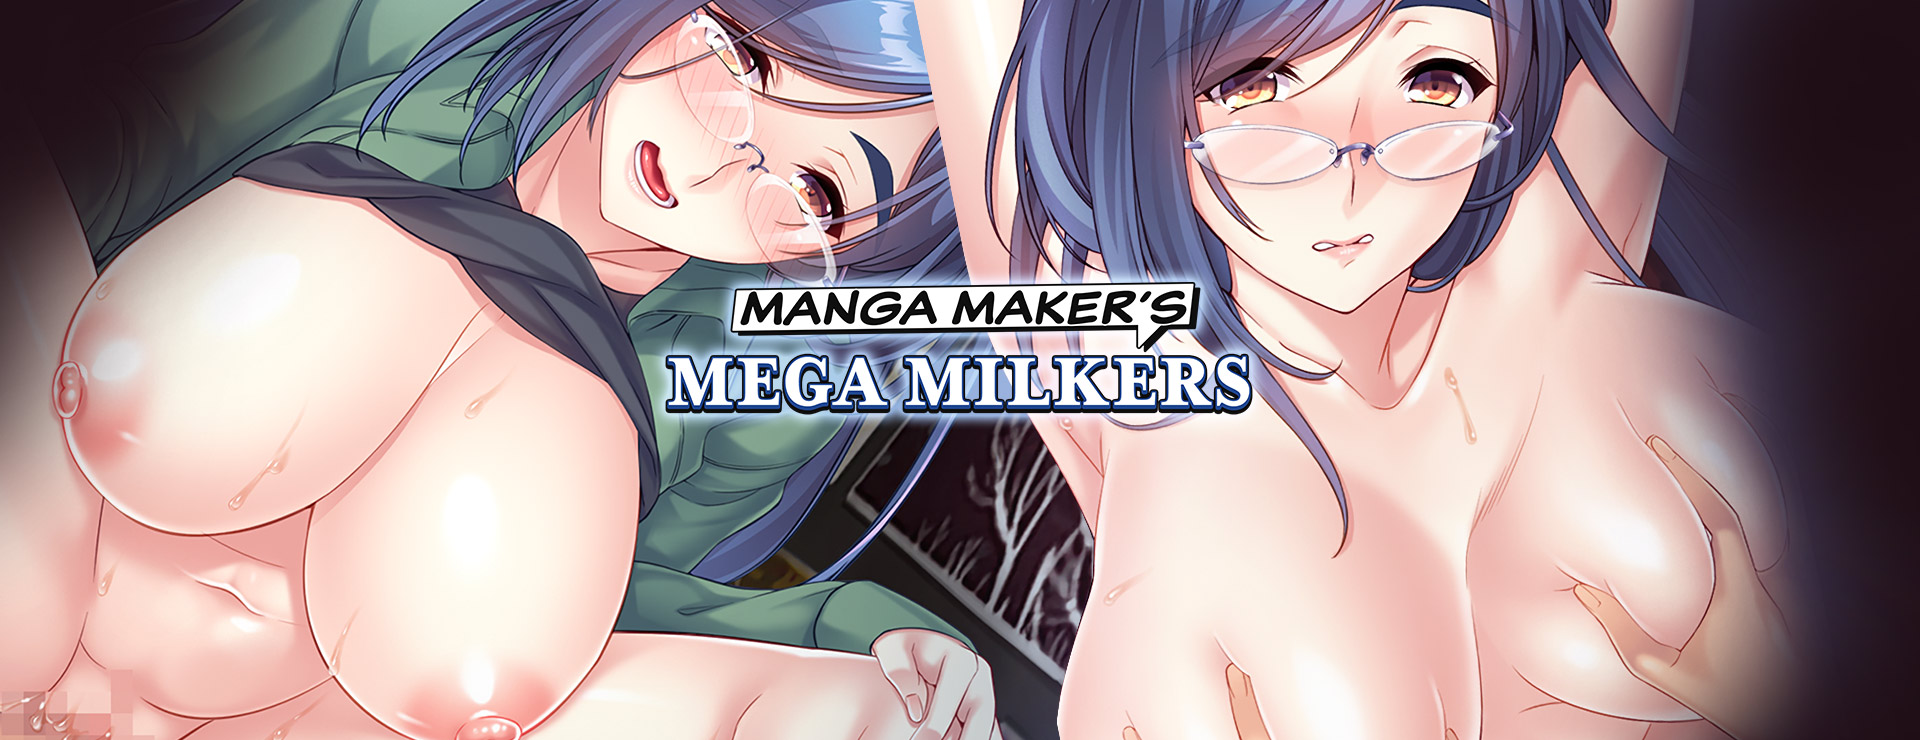 Manga Maker's Mega Milkers - Japanisches Adventure Spiel